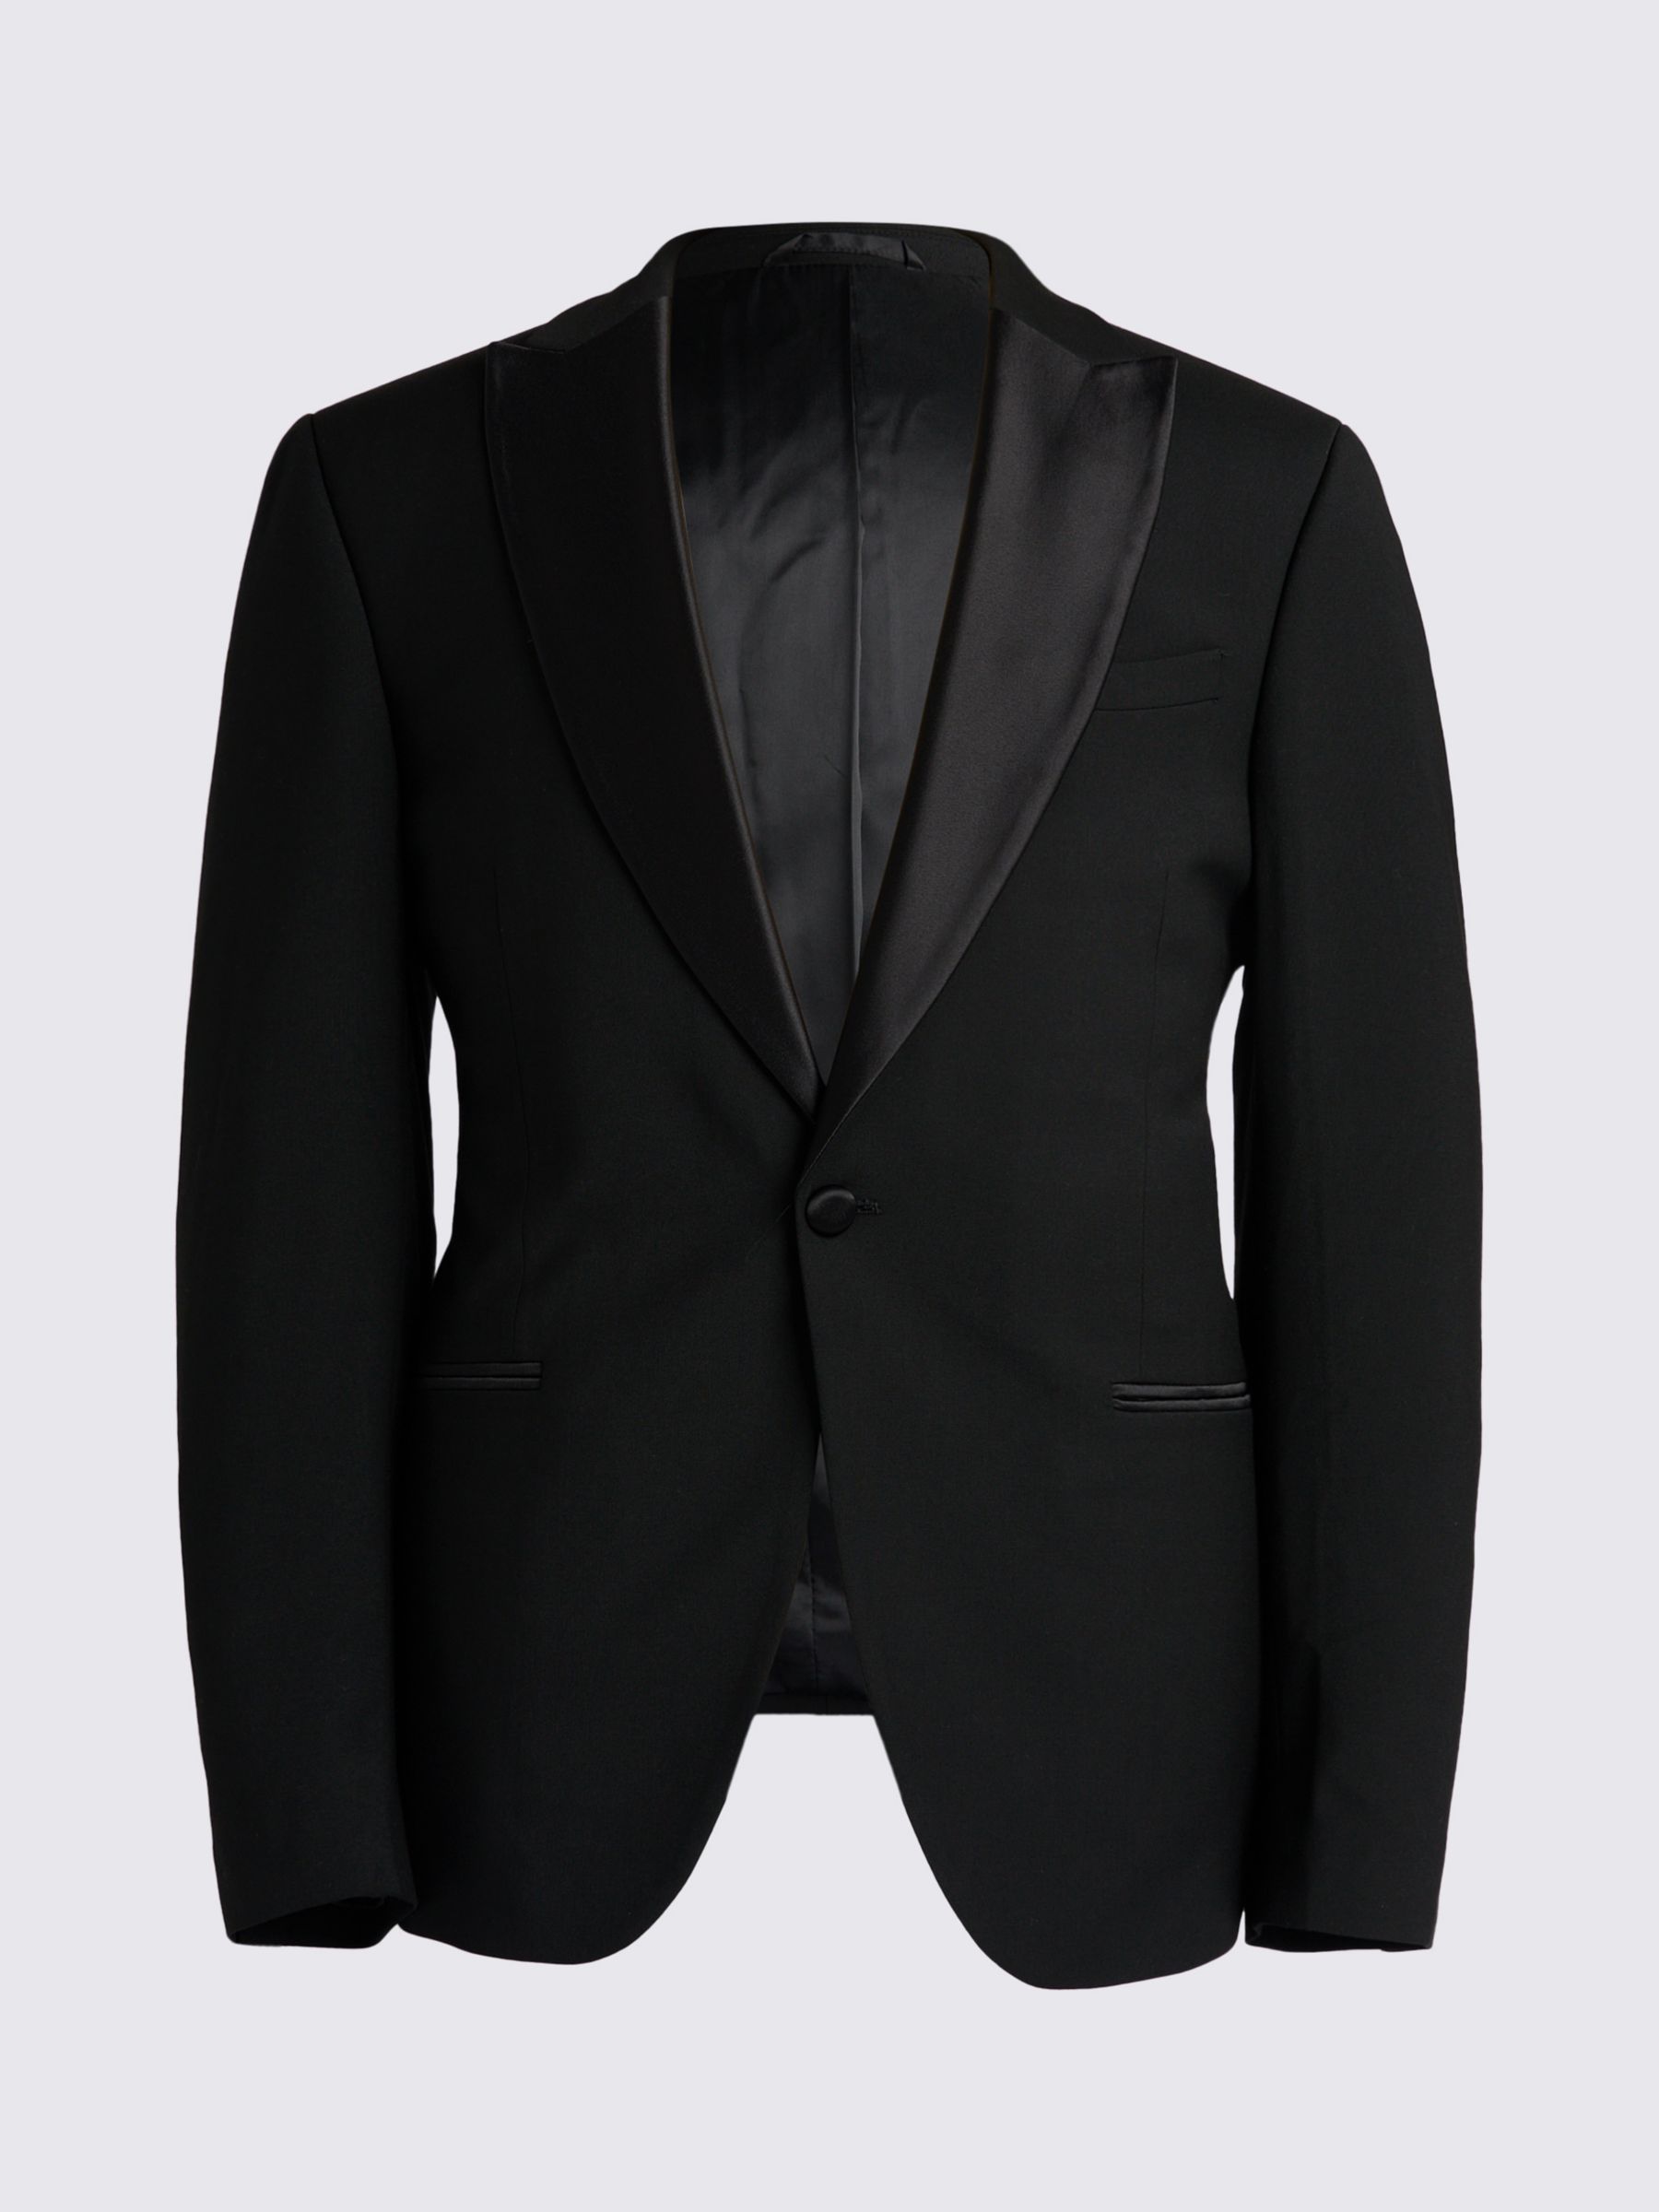 Moss Slim Fit Peak Lapel Tuxedo Jacket, Black, 34S